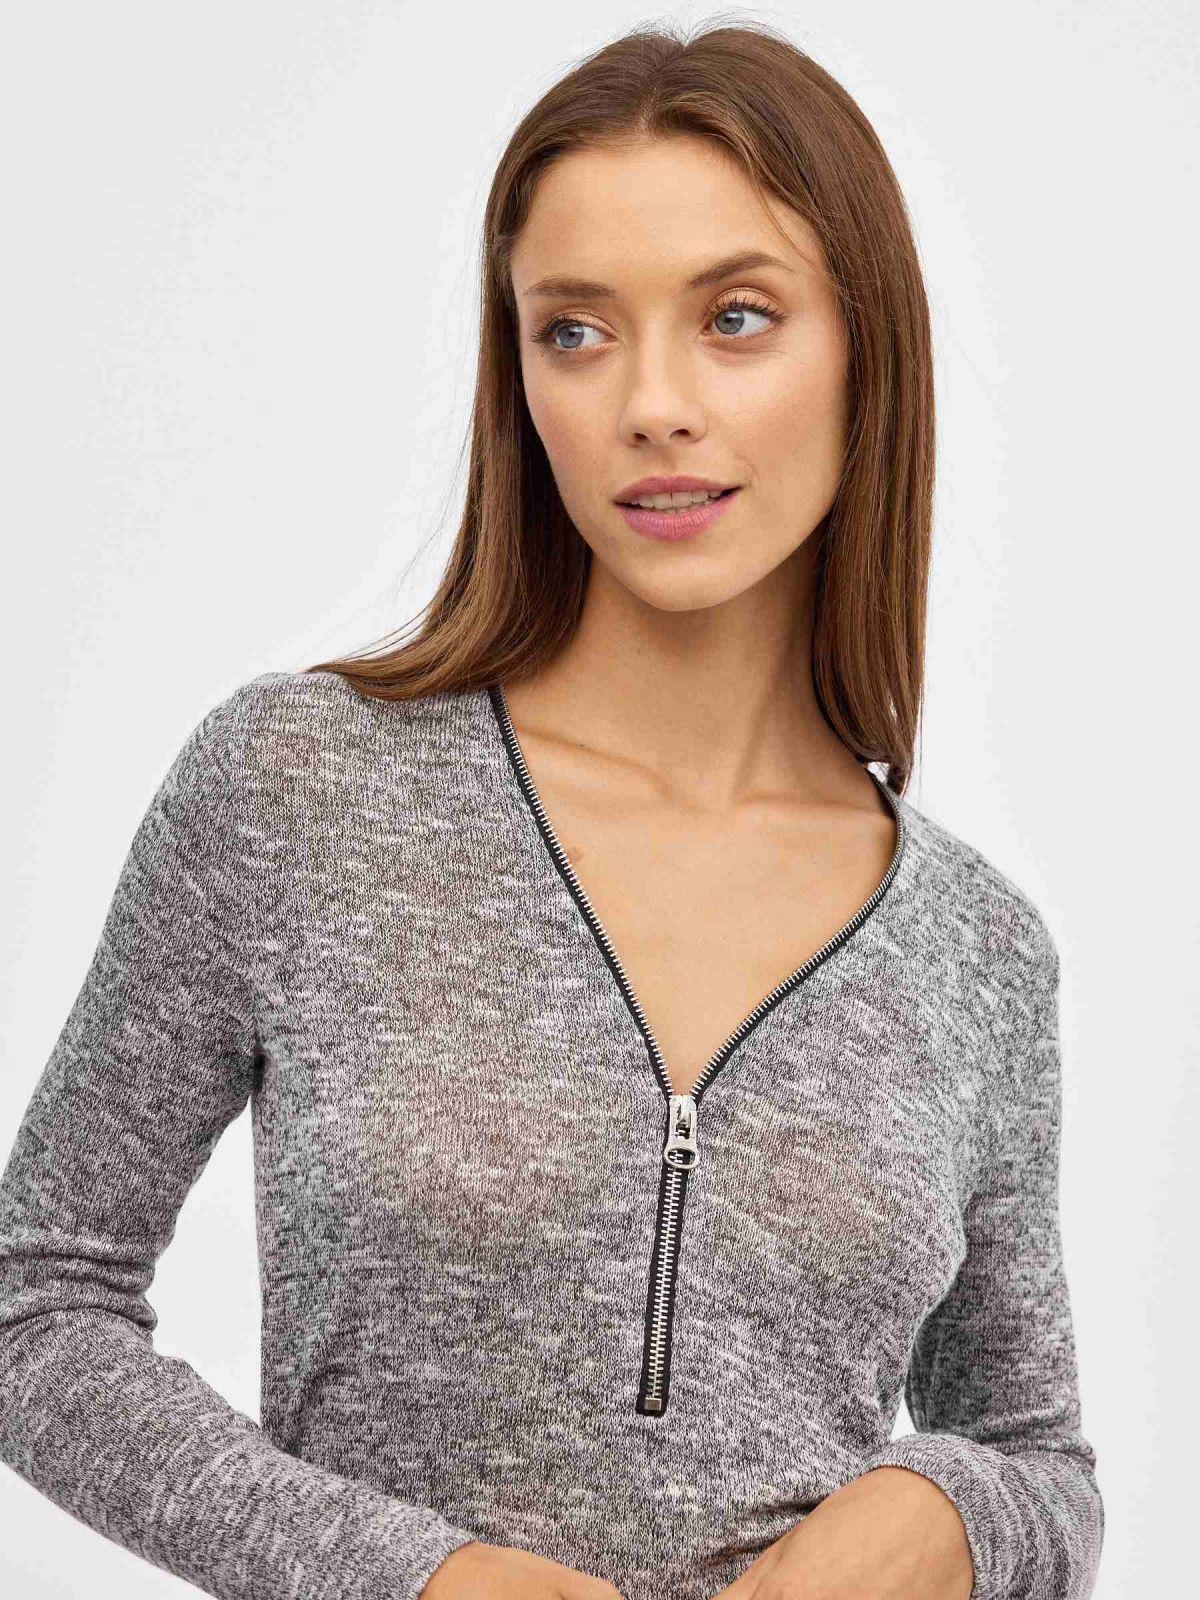 Marbled T-shirt with zipper light grey detail view